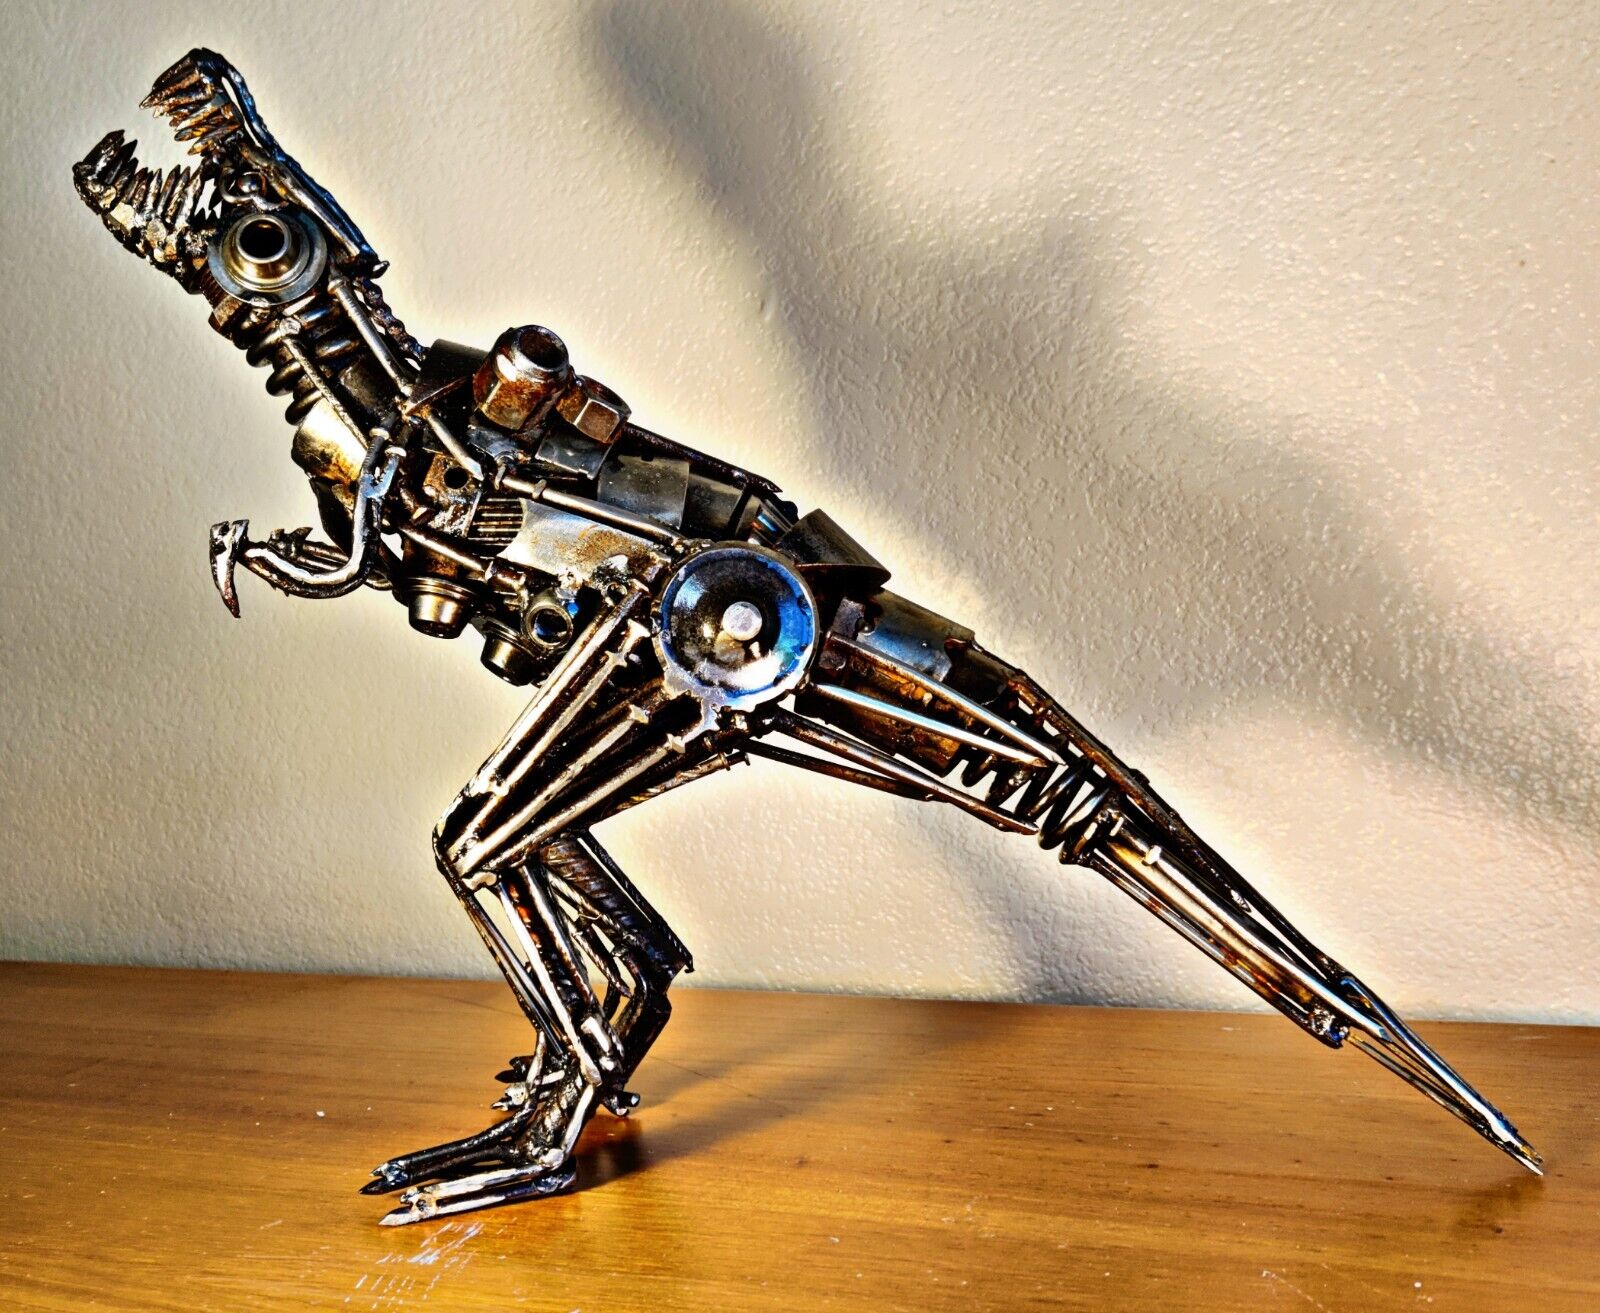 TREX dinosaur sculpture welded custom metal art